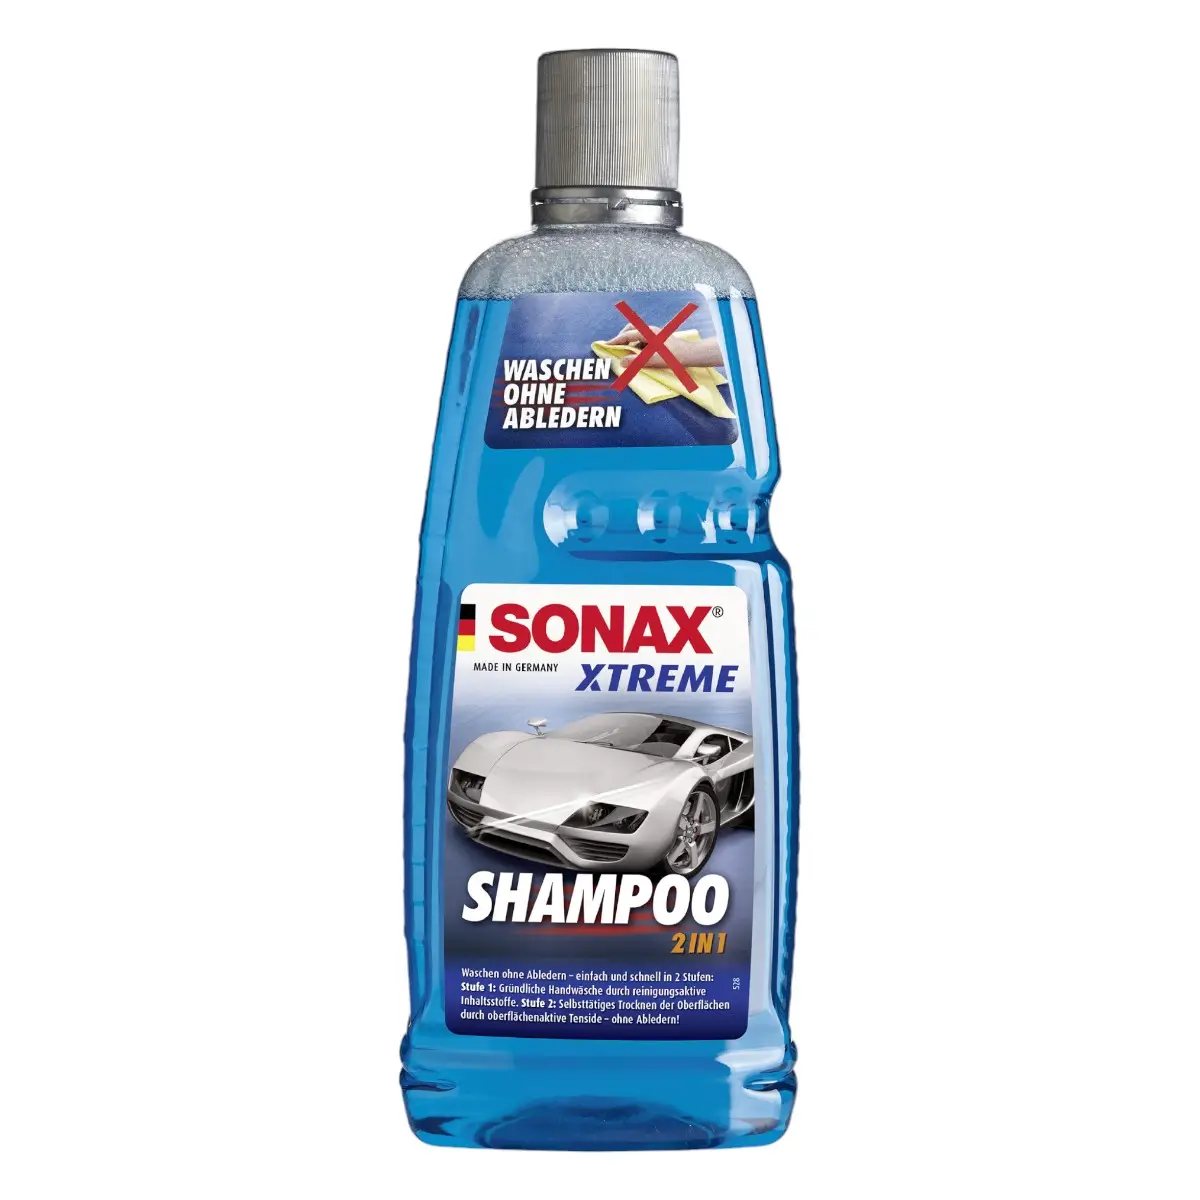 Sonax Xtreme Shampoo 2 in 1 1l